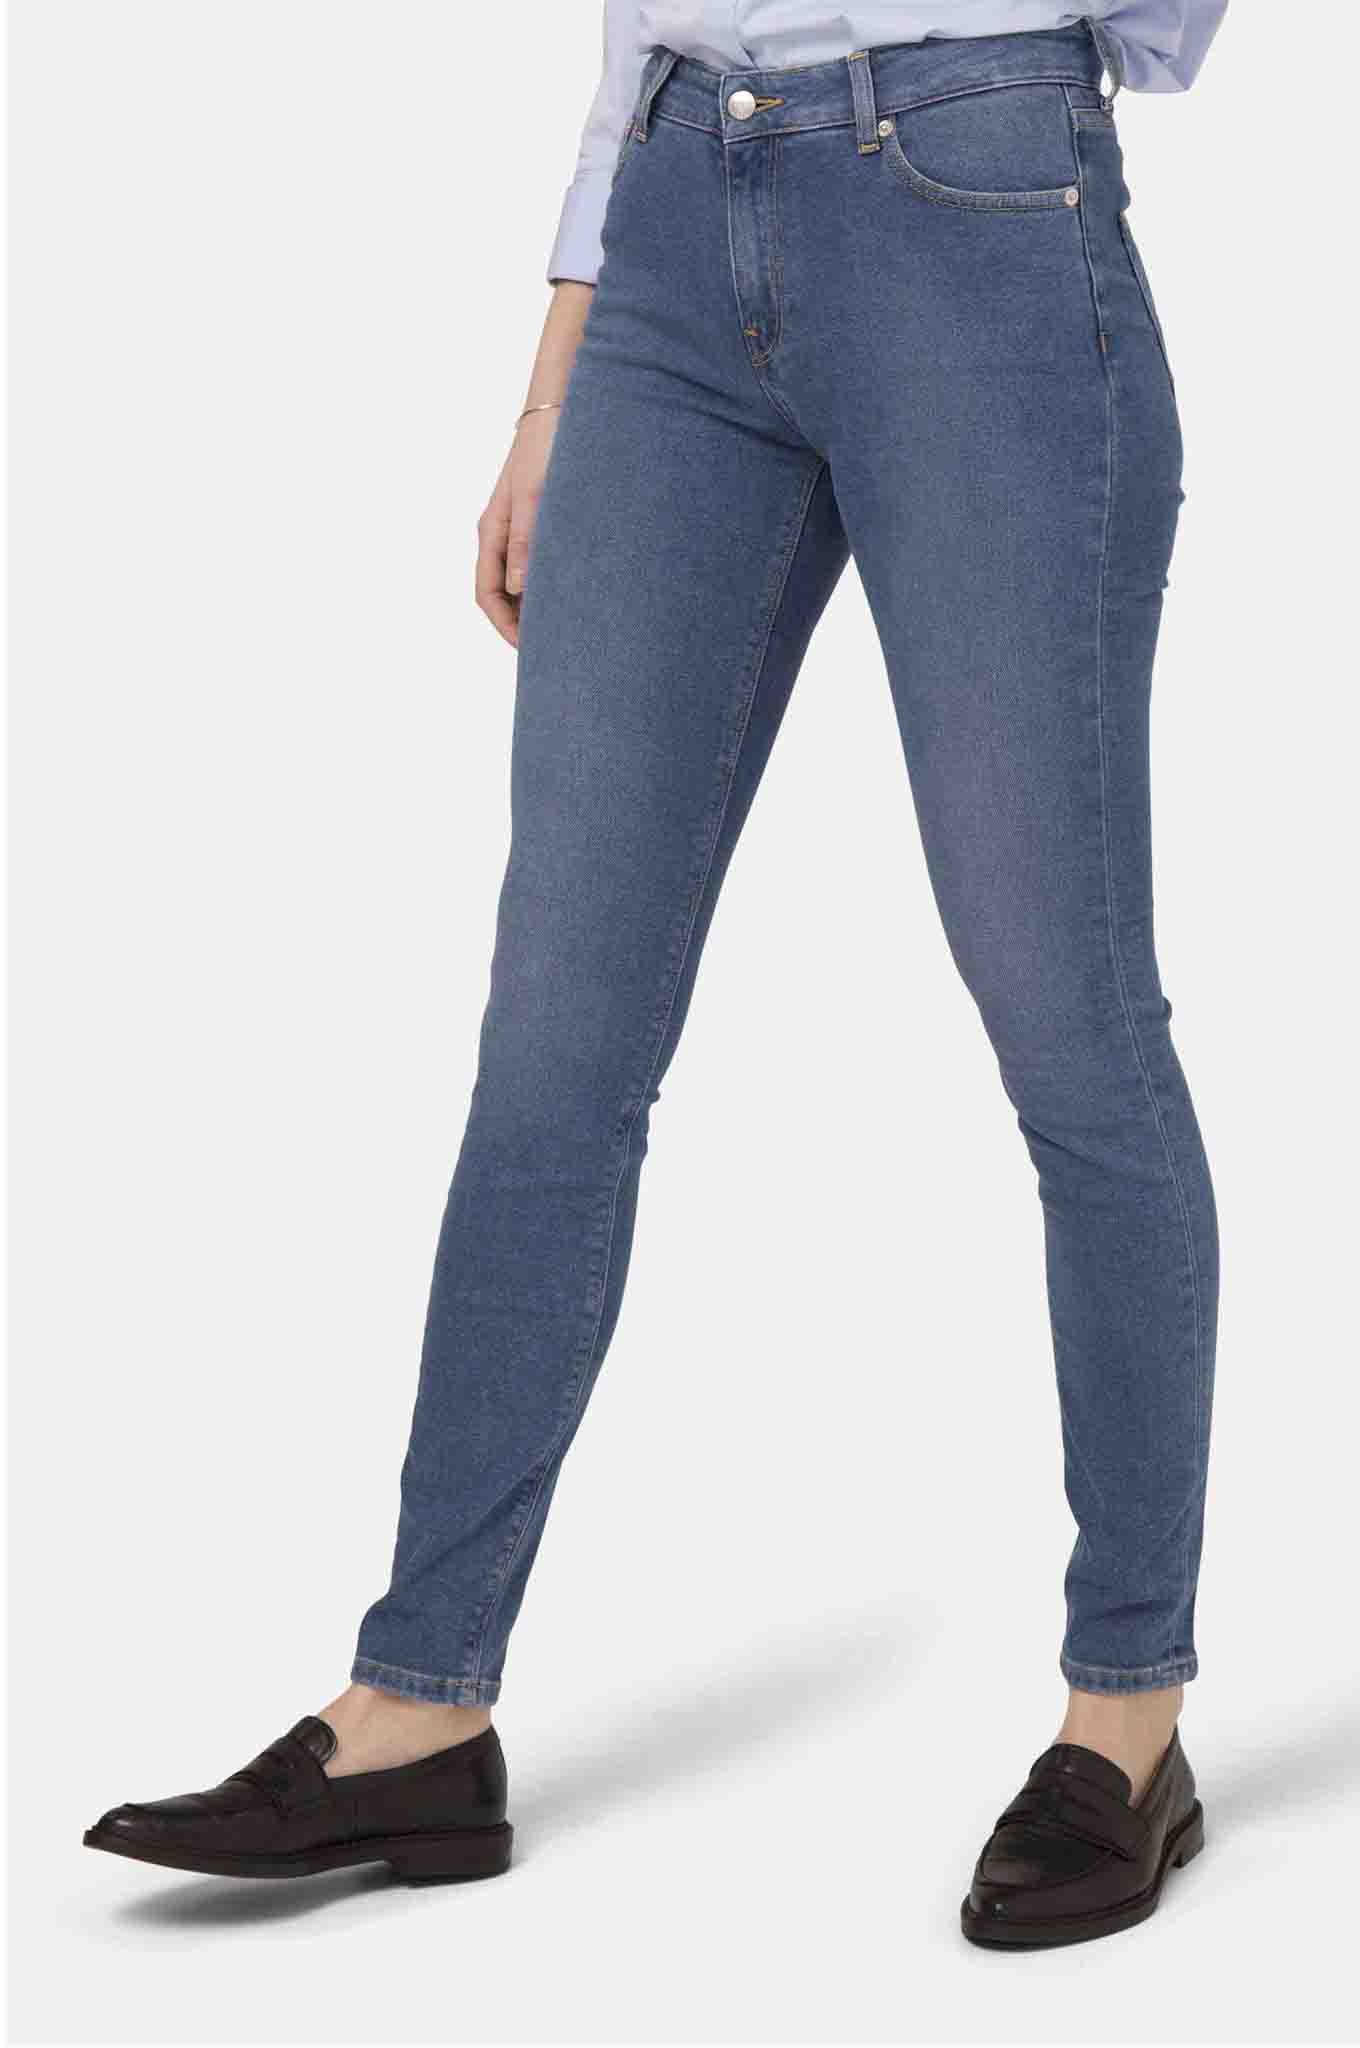 jean shorts fashion nova